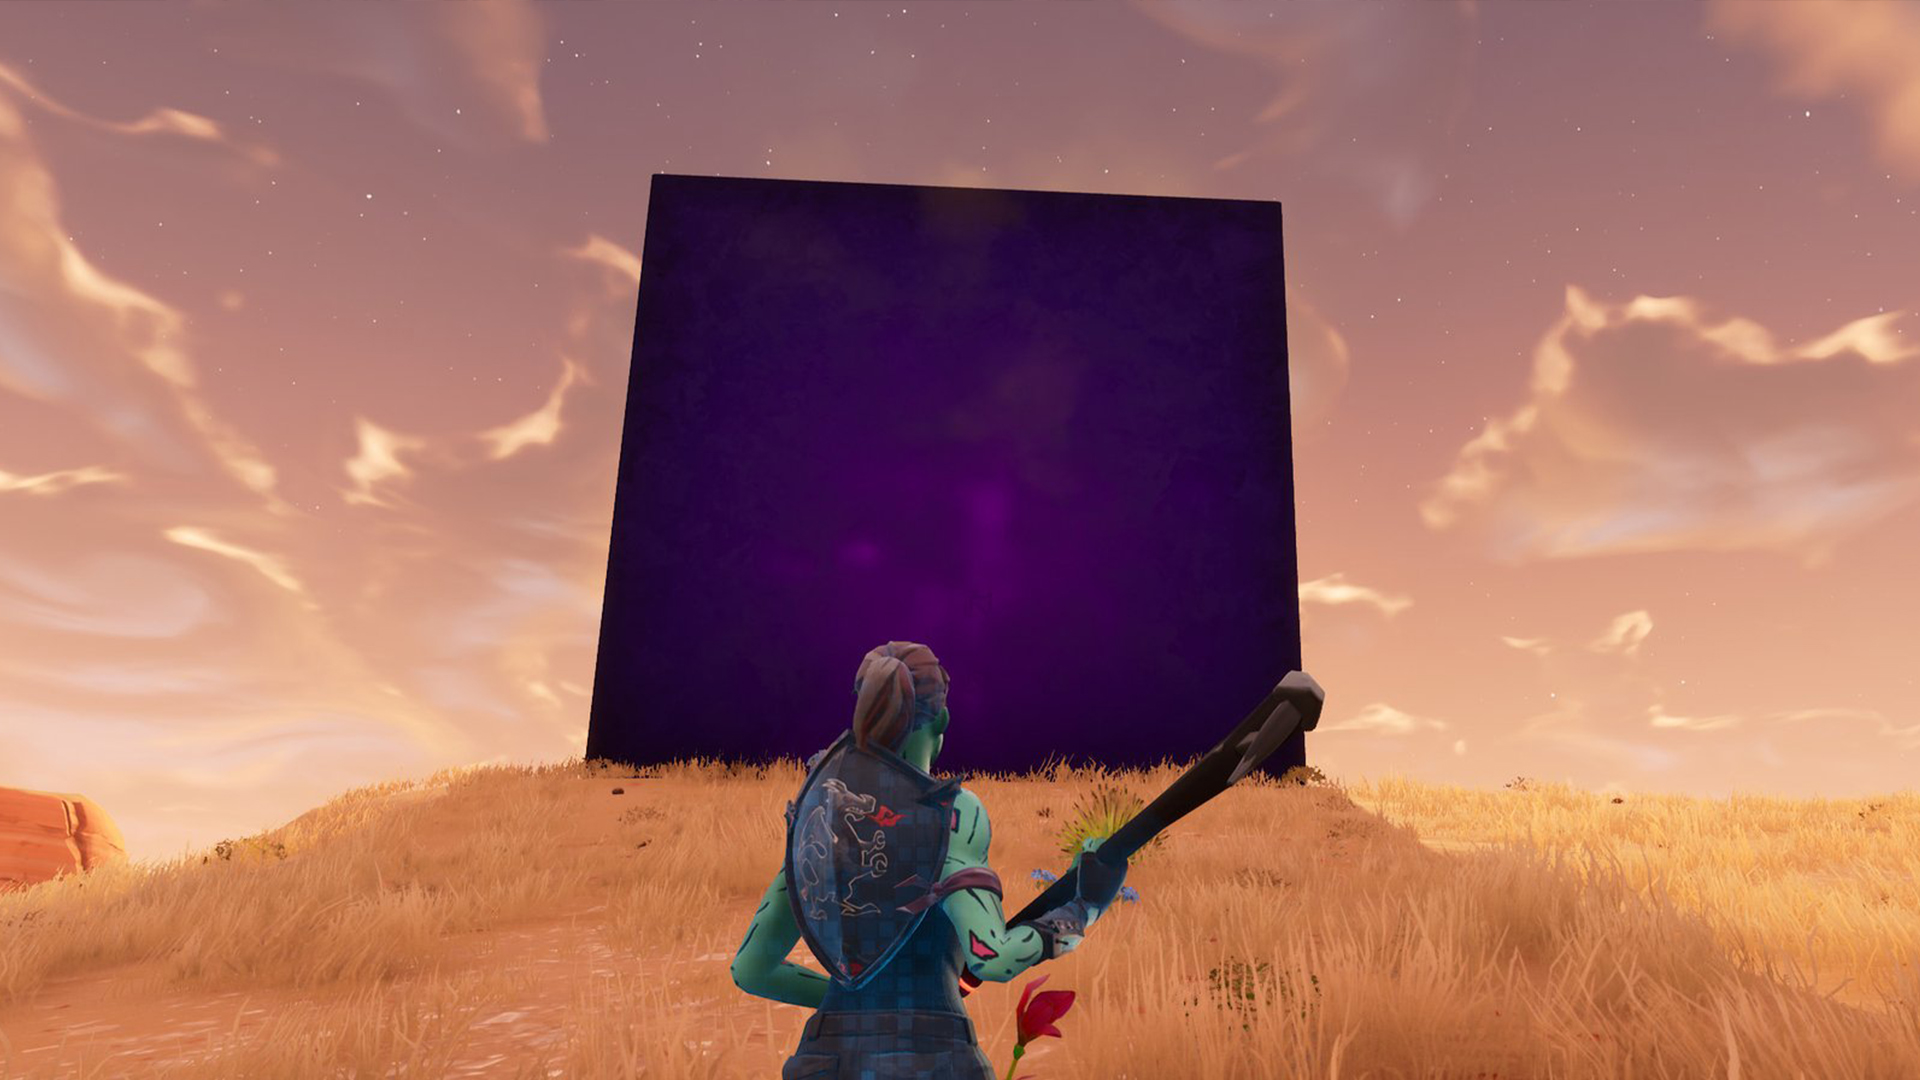 Fortnite’s rift is gone, leaving behind a giant purple ... - 1920 x 1080 jpeg 655kB